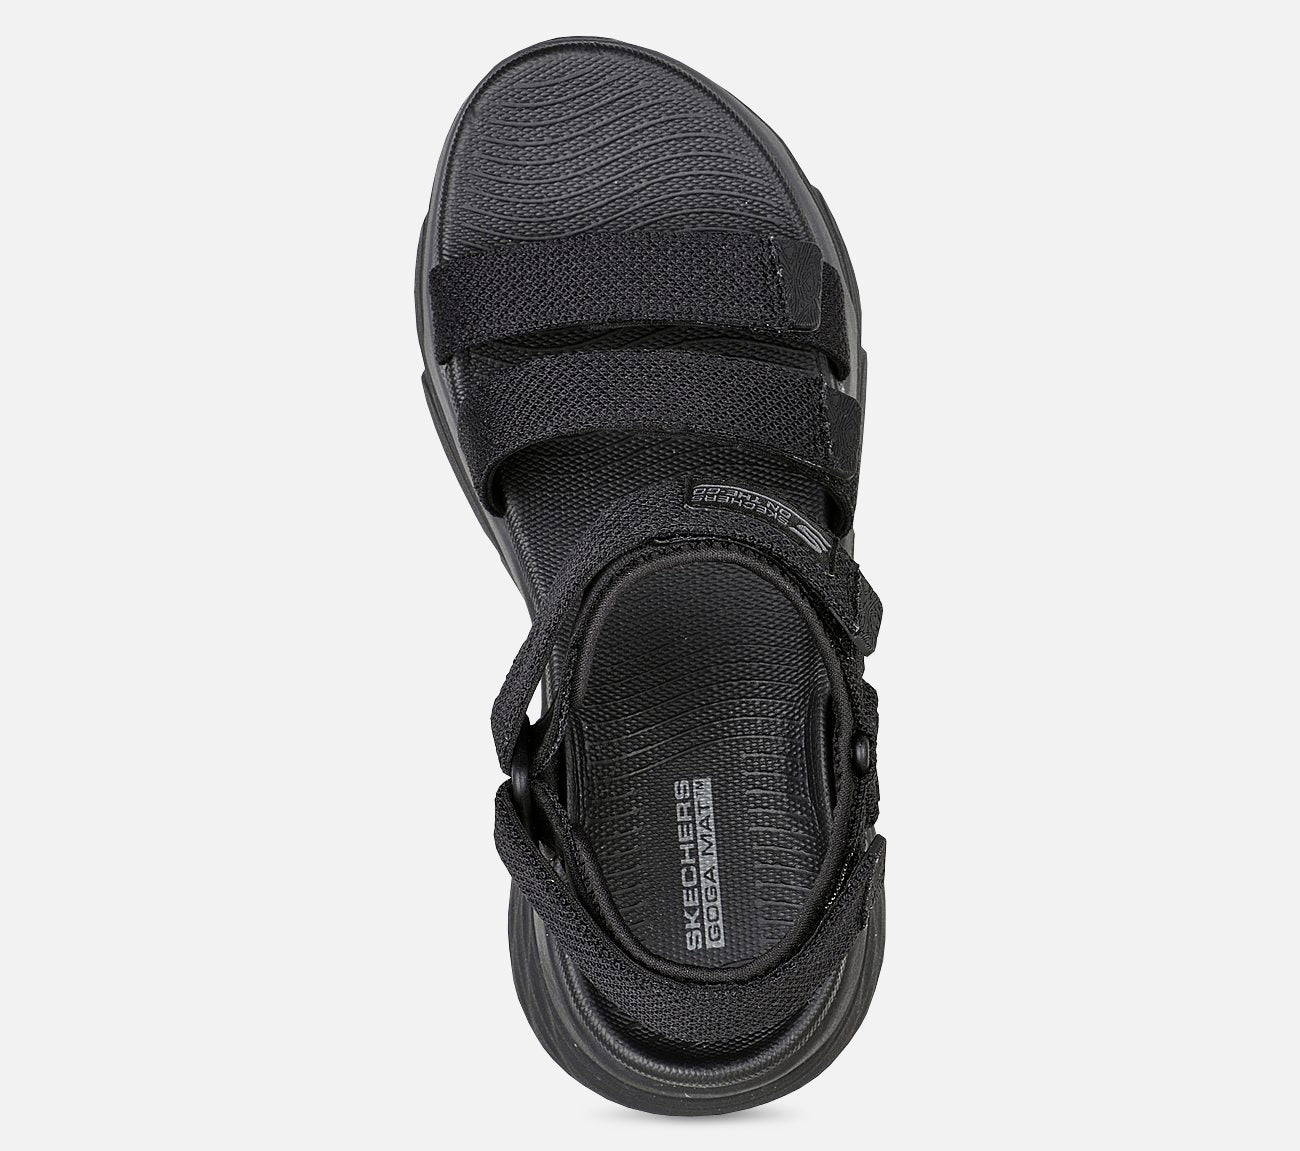 Max Cushioning Sandal - Slay Sandal Skechers